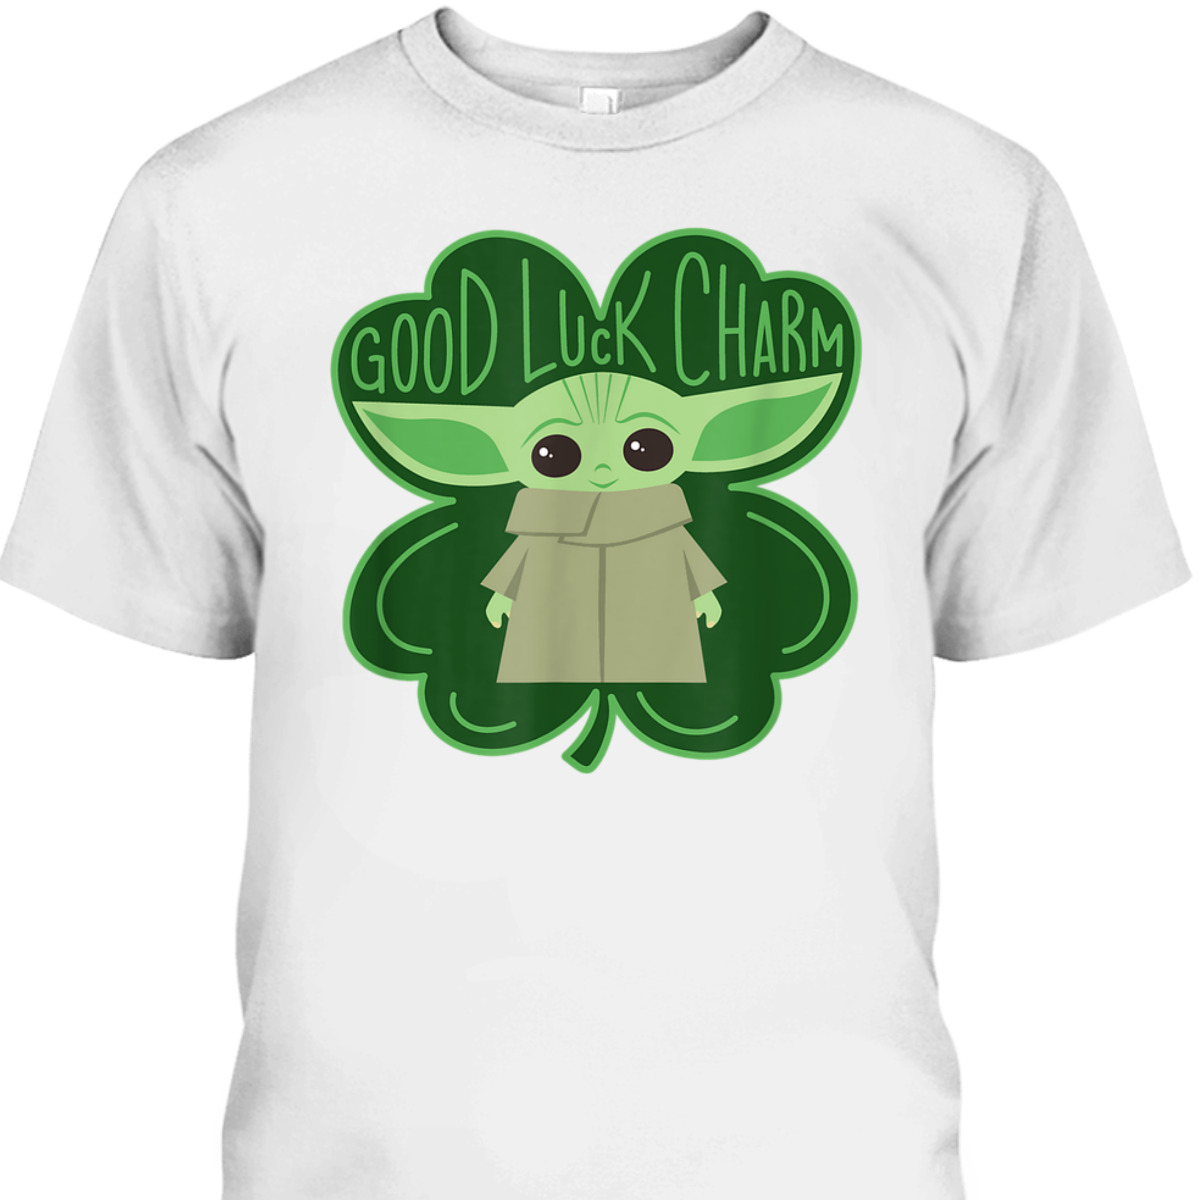 Star Wars The Mandalorian Good Luck Charm Shamrock St. Patrick’s Day T-Shirt